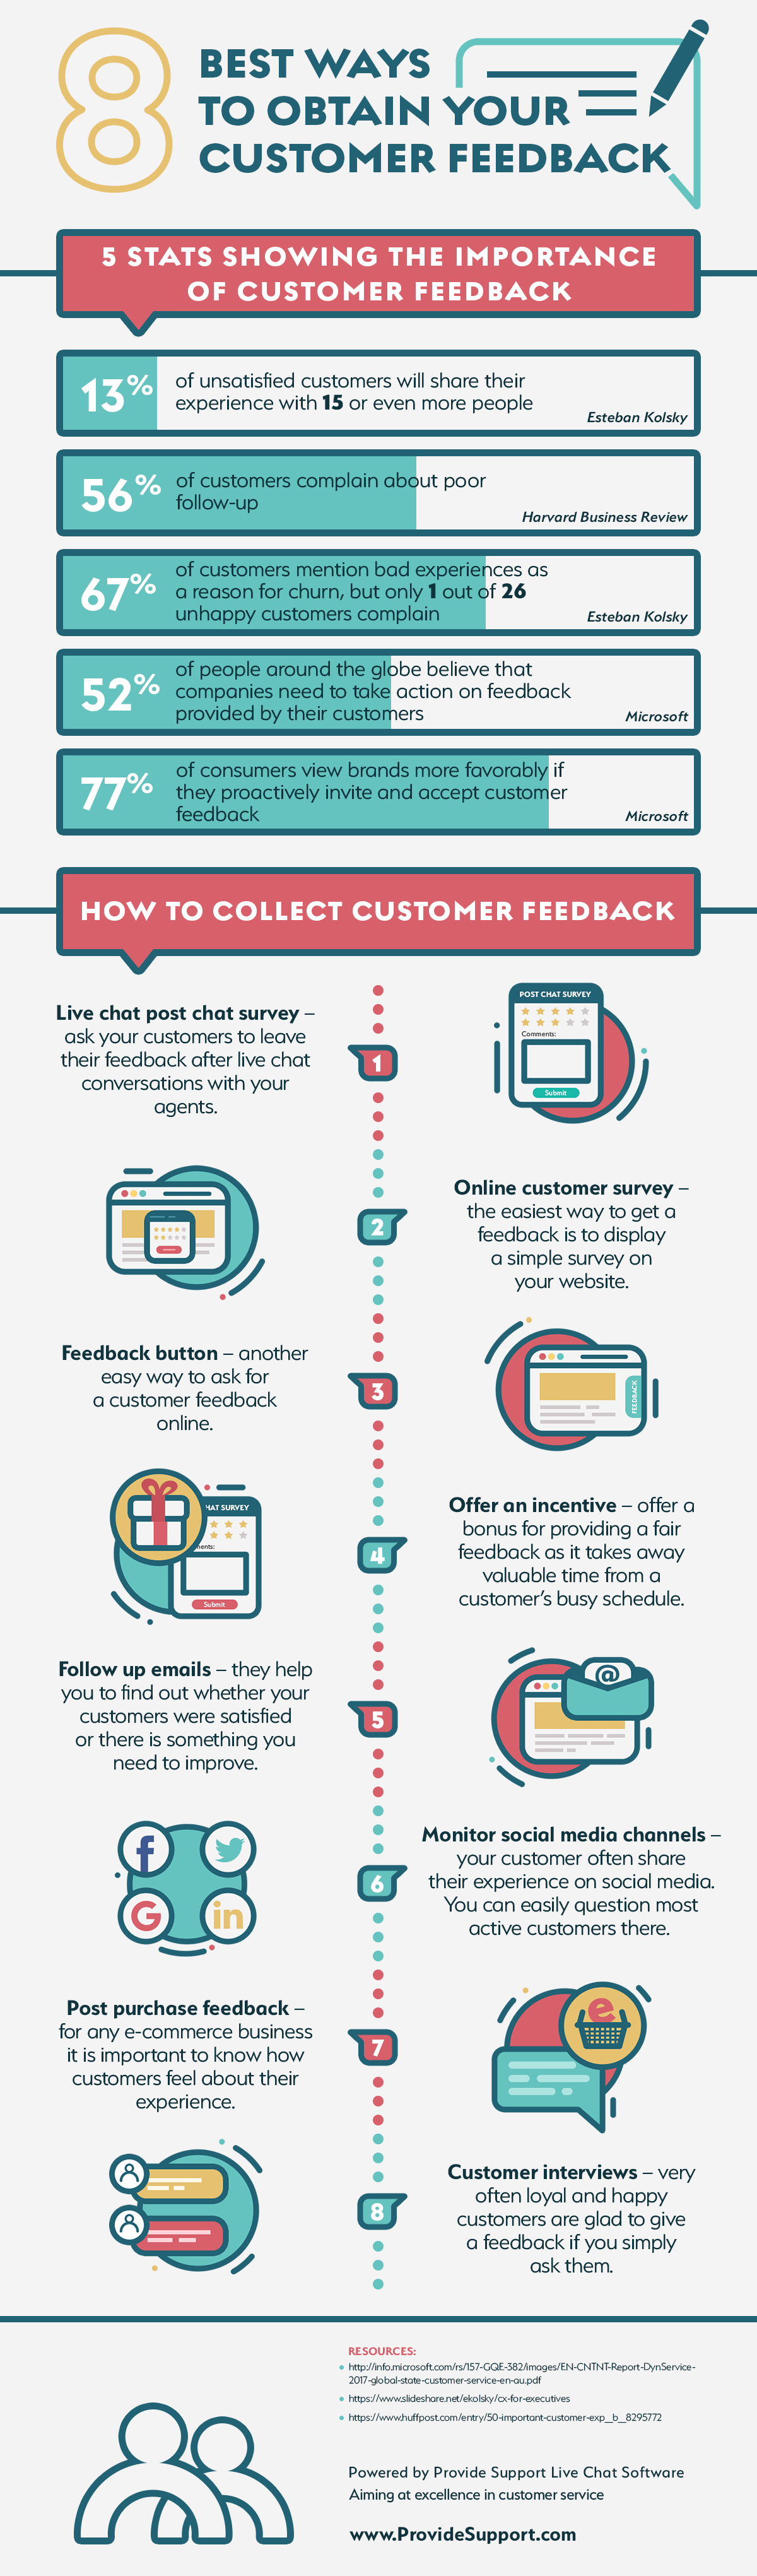 8 Best Ways to Obtain Customer Feedback